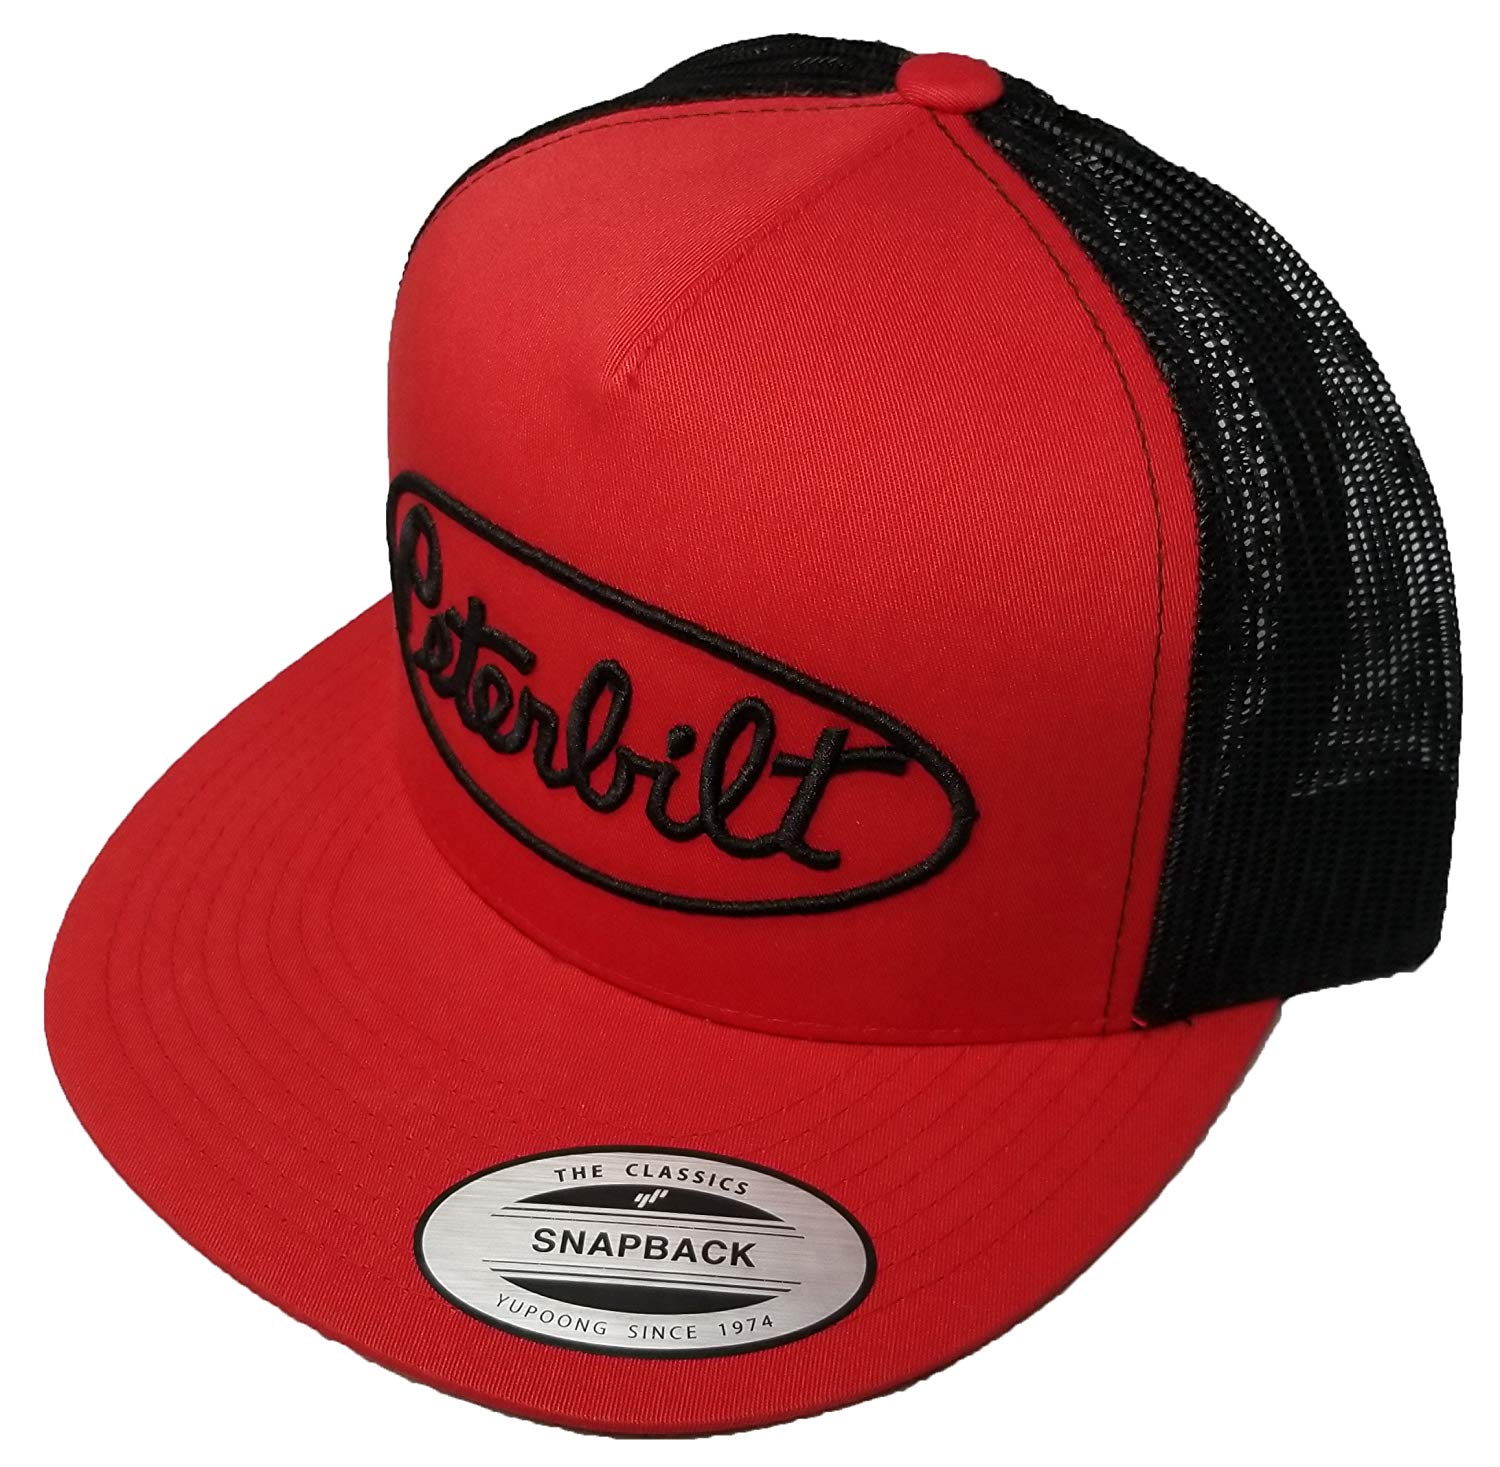 Peterbilt Logo - Amazon.com: Yupoong Peterbilt Logo Emblem Hat Cap Adult Adjustable ...